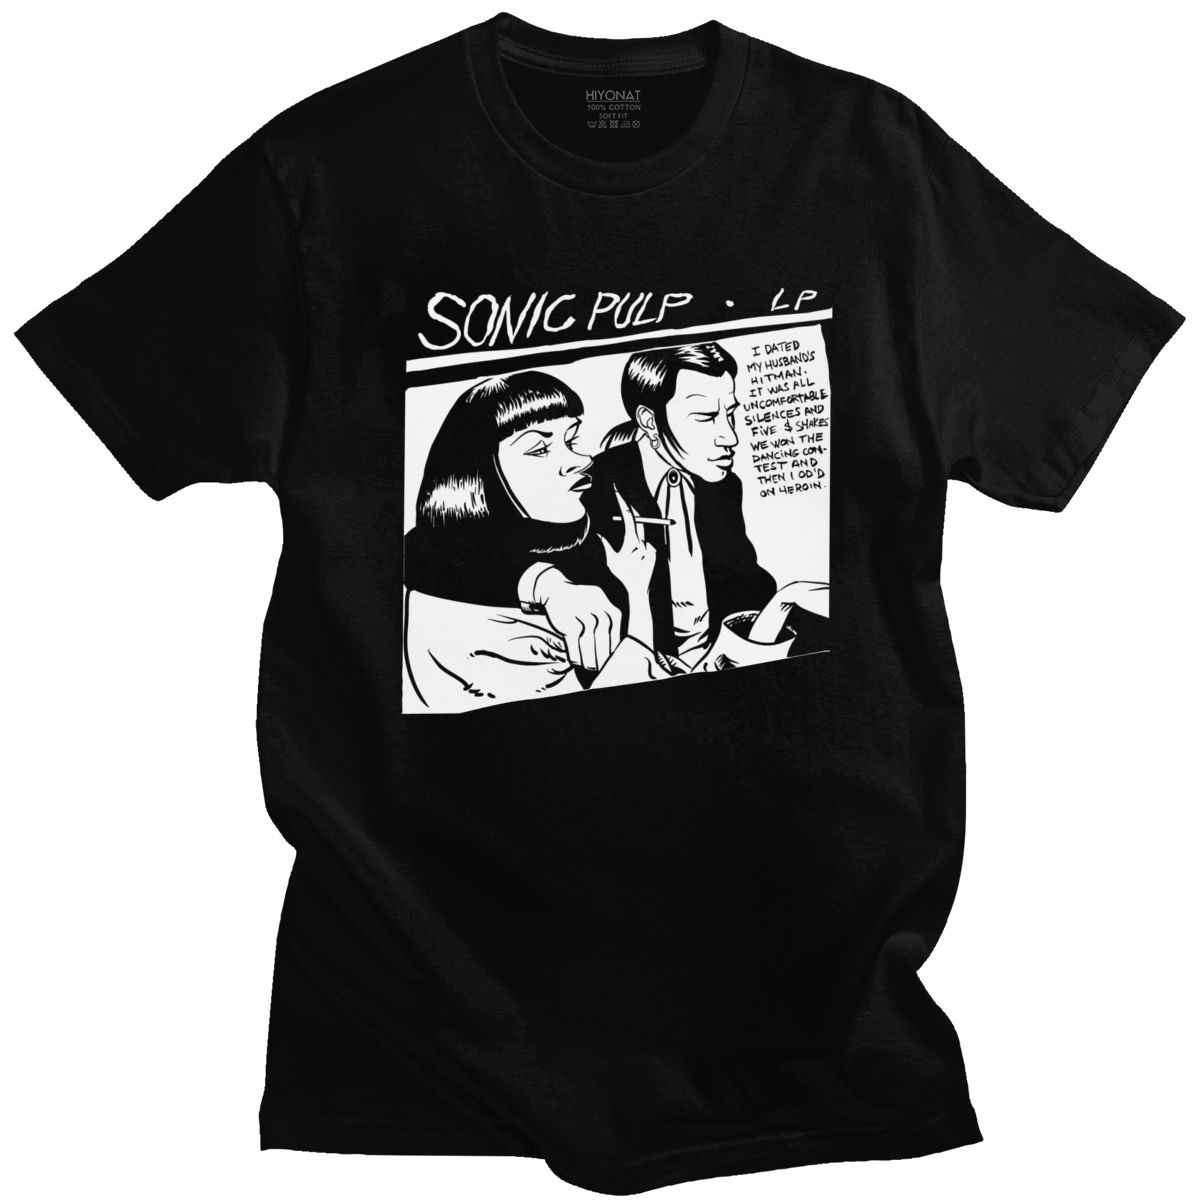 Funny Men's Pulp Fiction T-shirt Short Sleeves Cotton Quentin Tarantino Tshirt Movie Film Shirt Mia Wallace Tee Tops Apparel